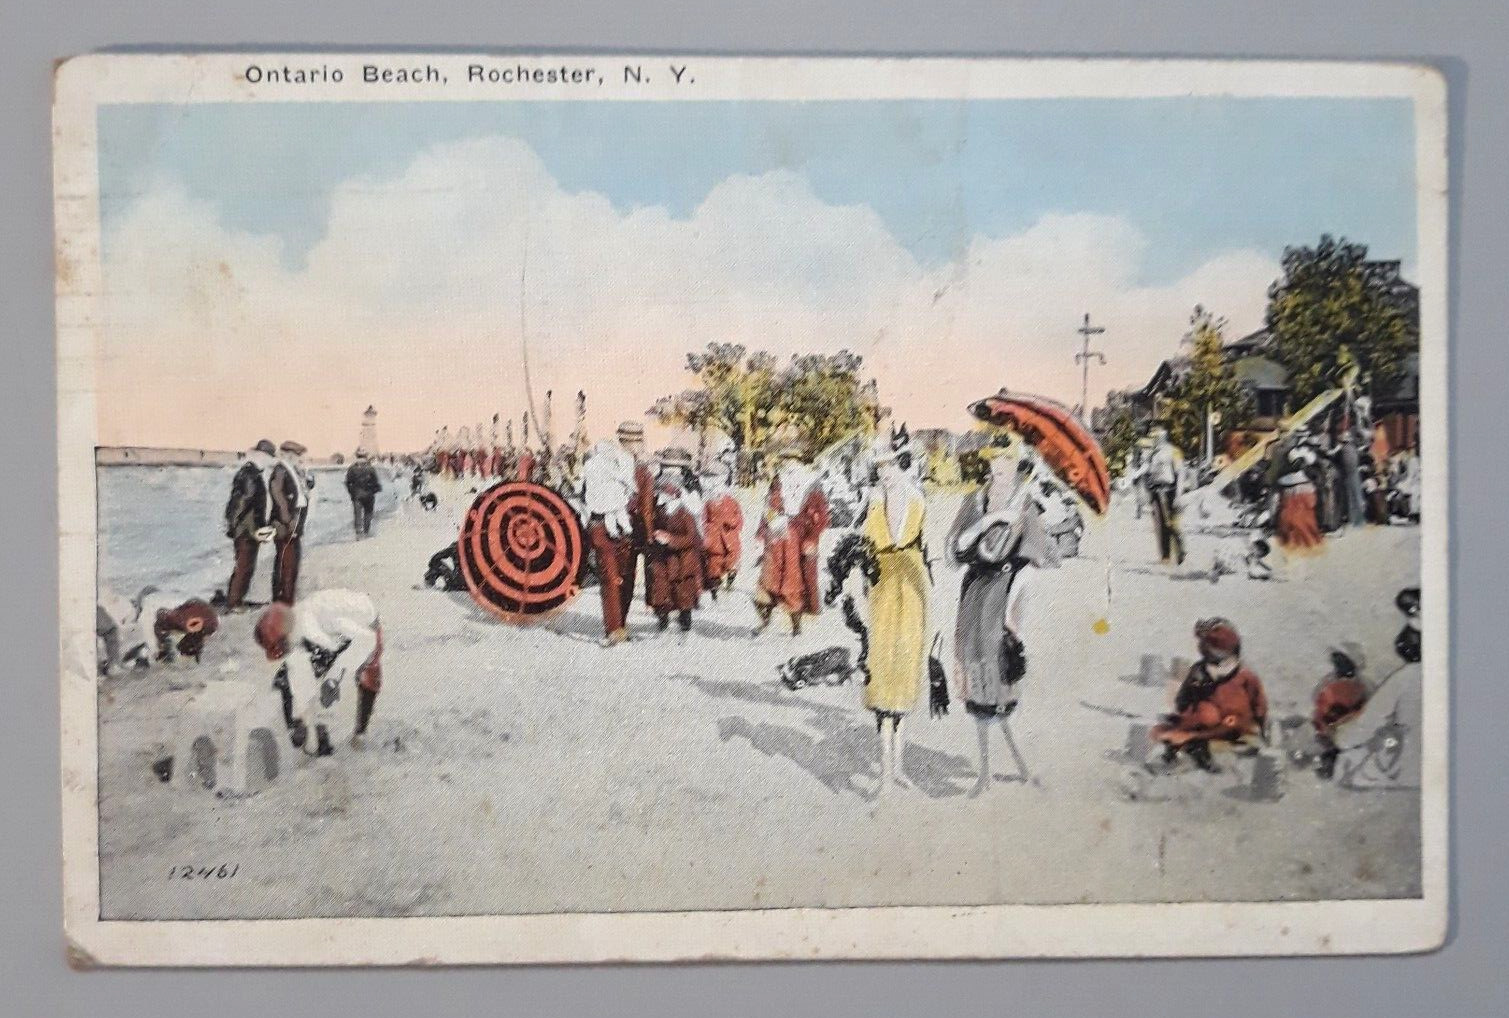 Rochester NY Vintage Postcard 1922 Ontario Beach People on Beach